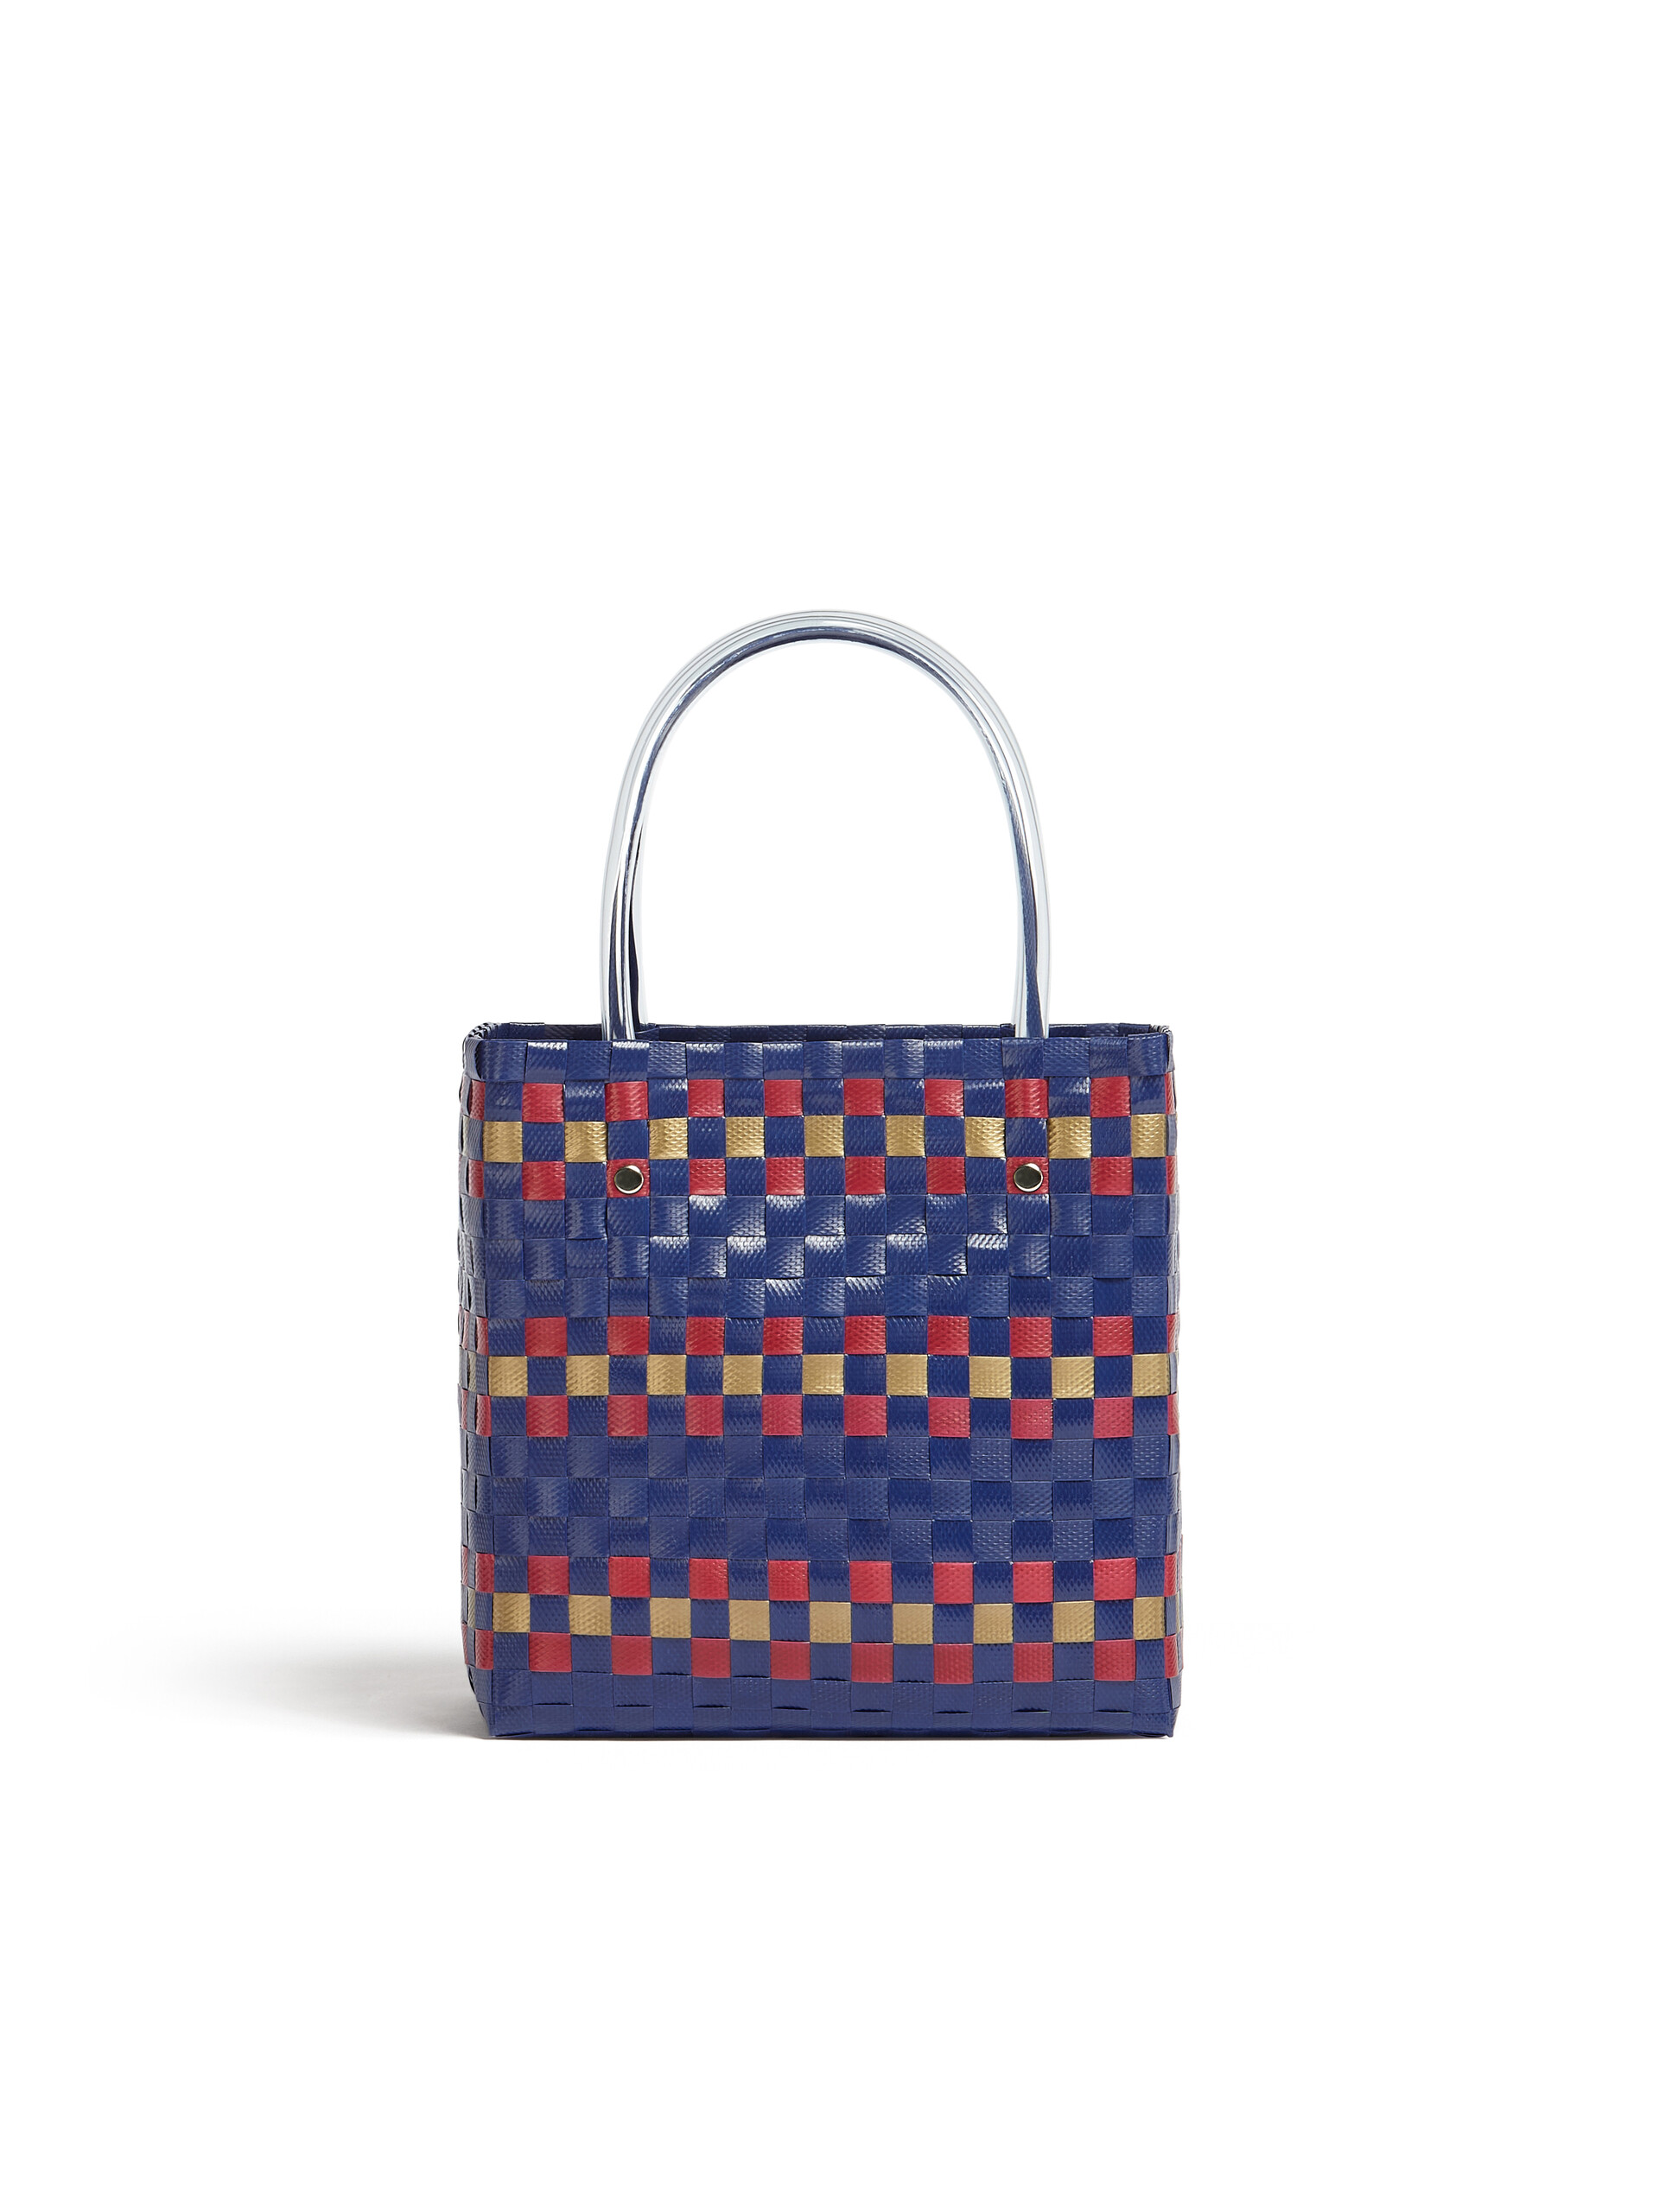 MARNI MARKET BASKET bag in blue woven material - Bags - Image 3